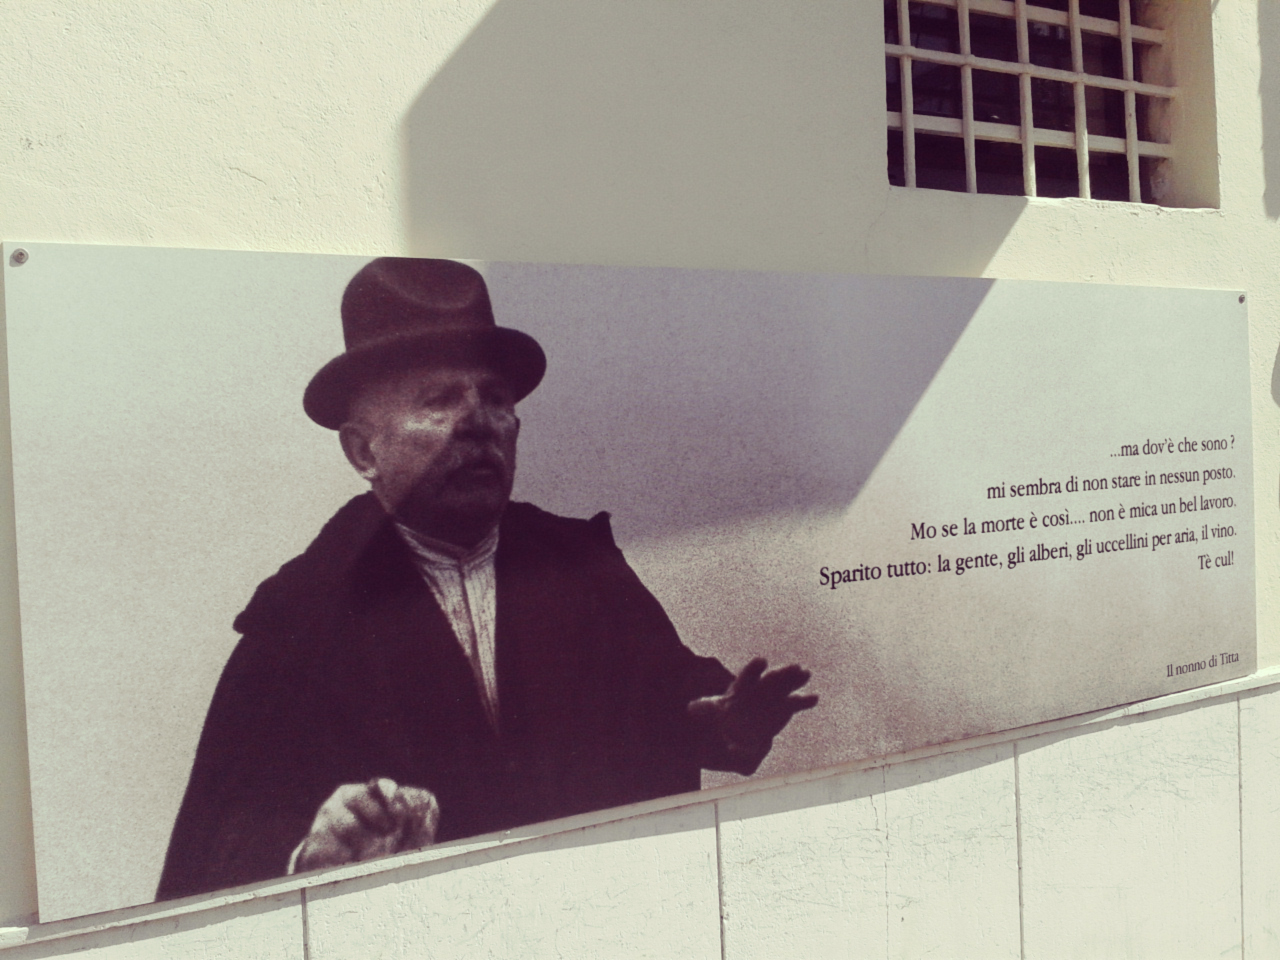 Fellini quotes on the walls near Rimini's Market